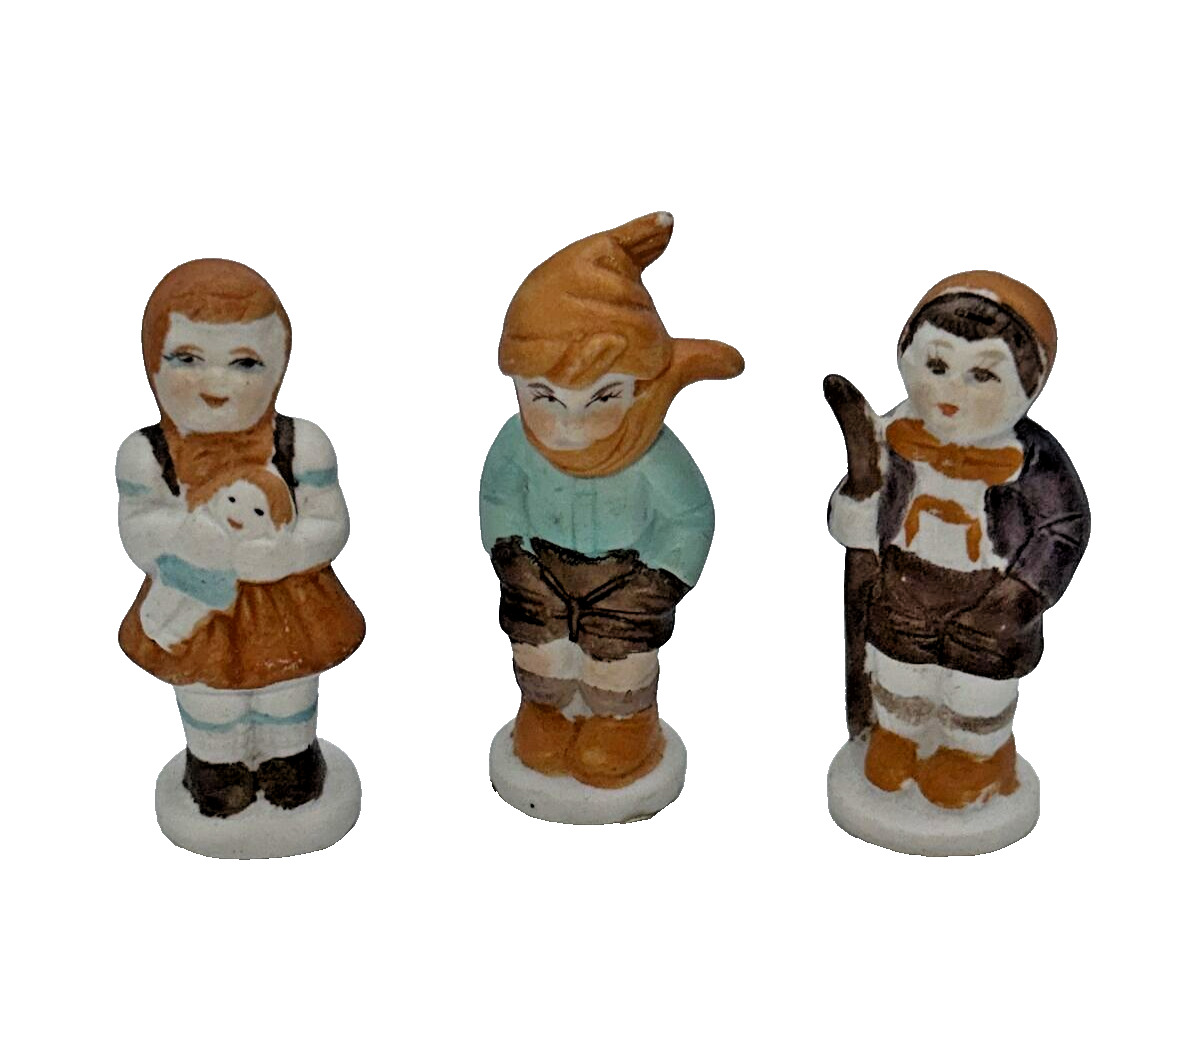 Vintage (Antique?) Ceramic Village People Figurines set of 3 Estate PIeces